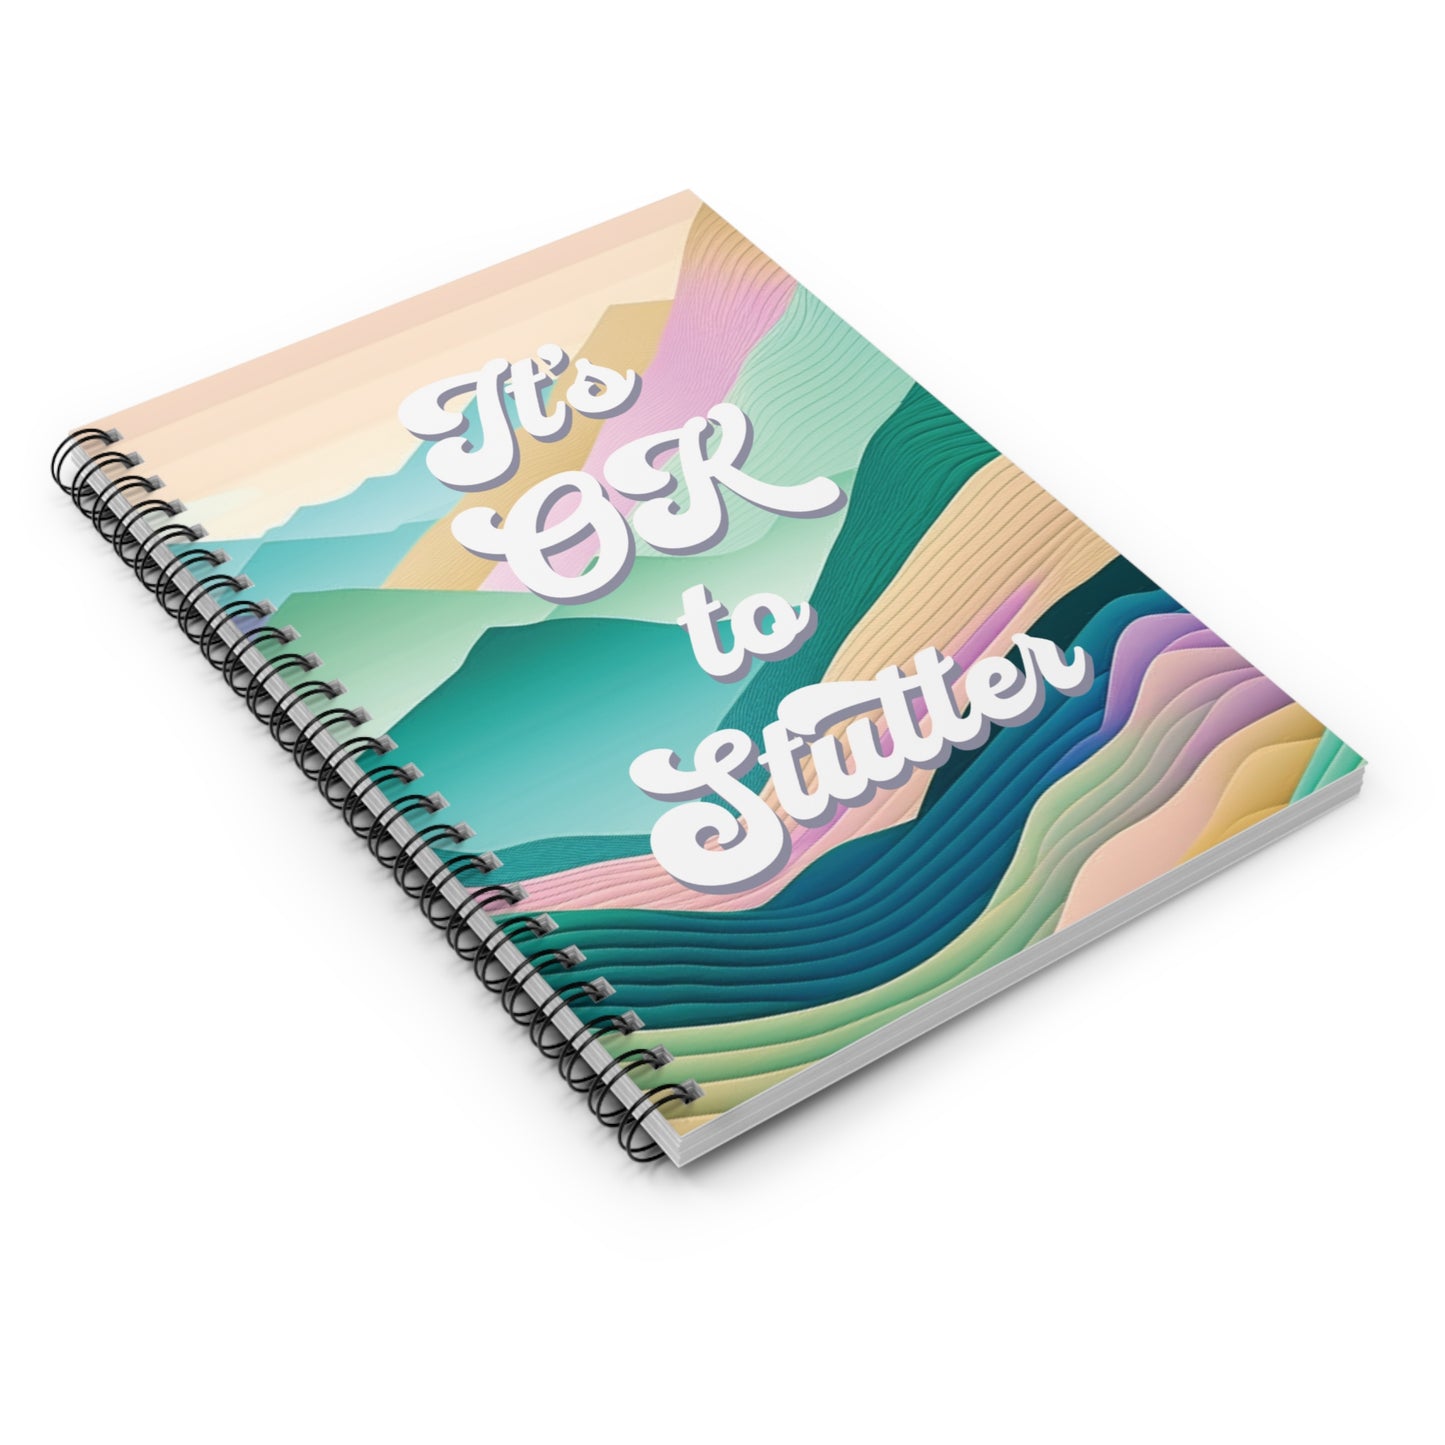 It's OK to Stutter Mountain Spiral Notebook